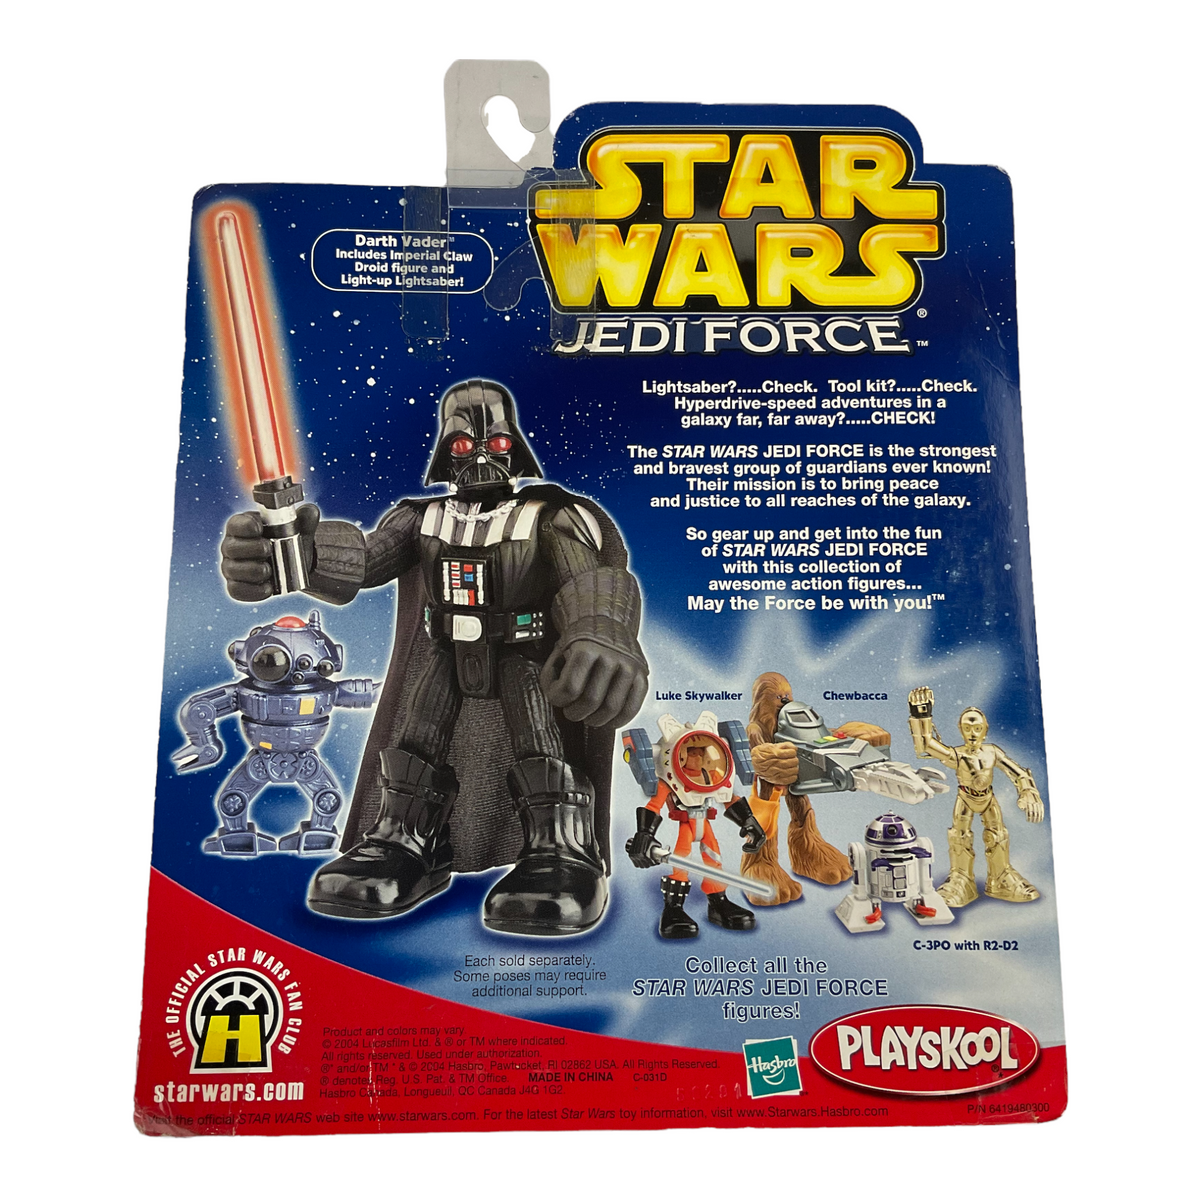 Playskool Star Wars Jedi Force Darth Vader Figure